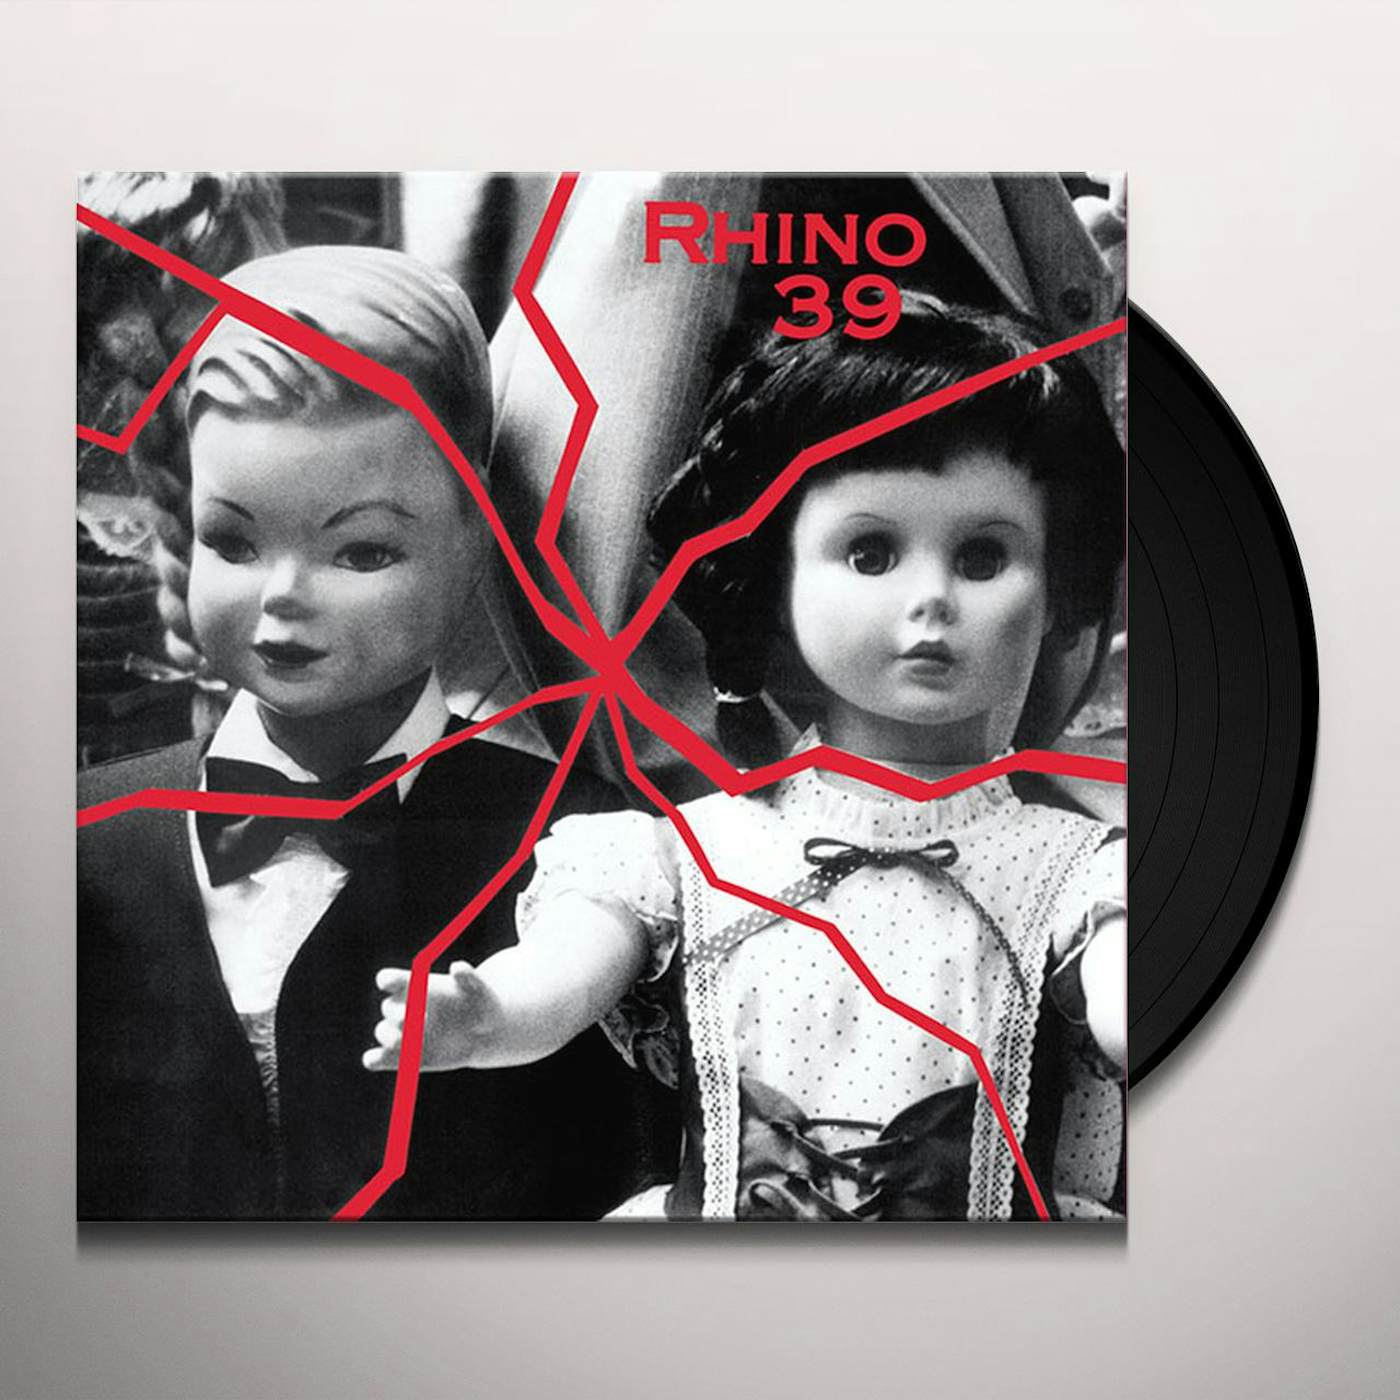 Rhino 39 Vinyl Record